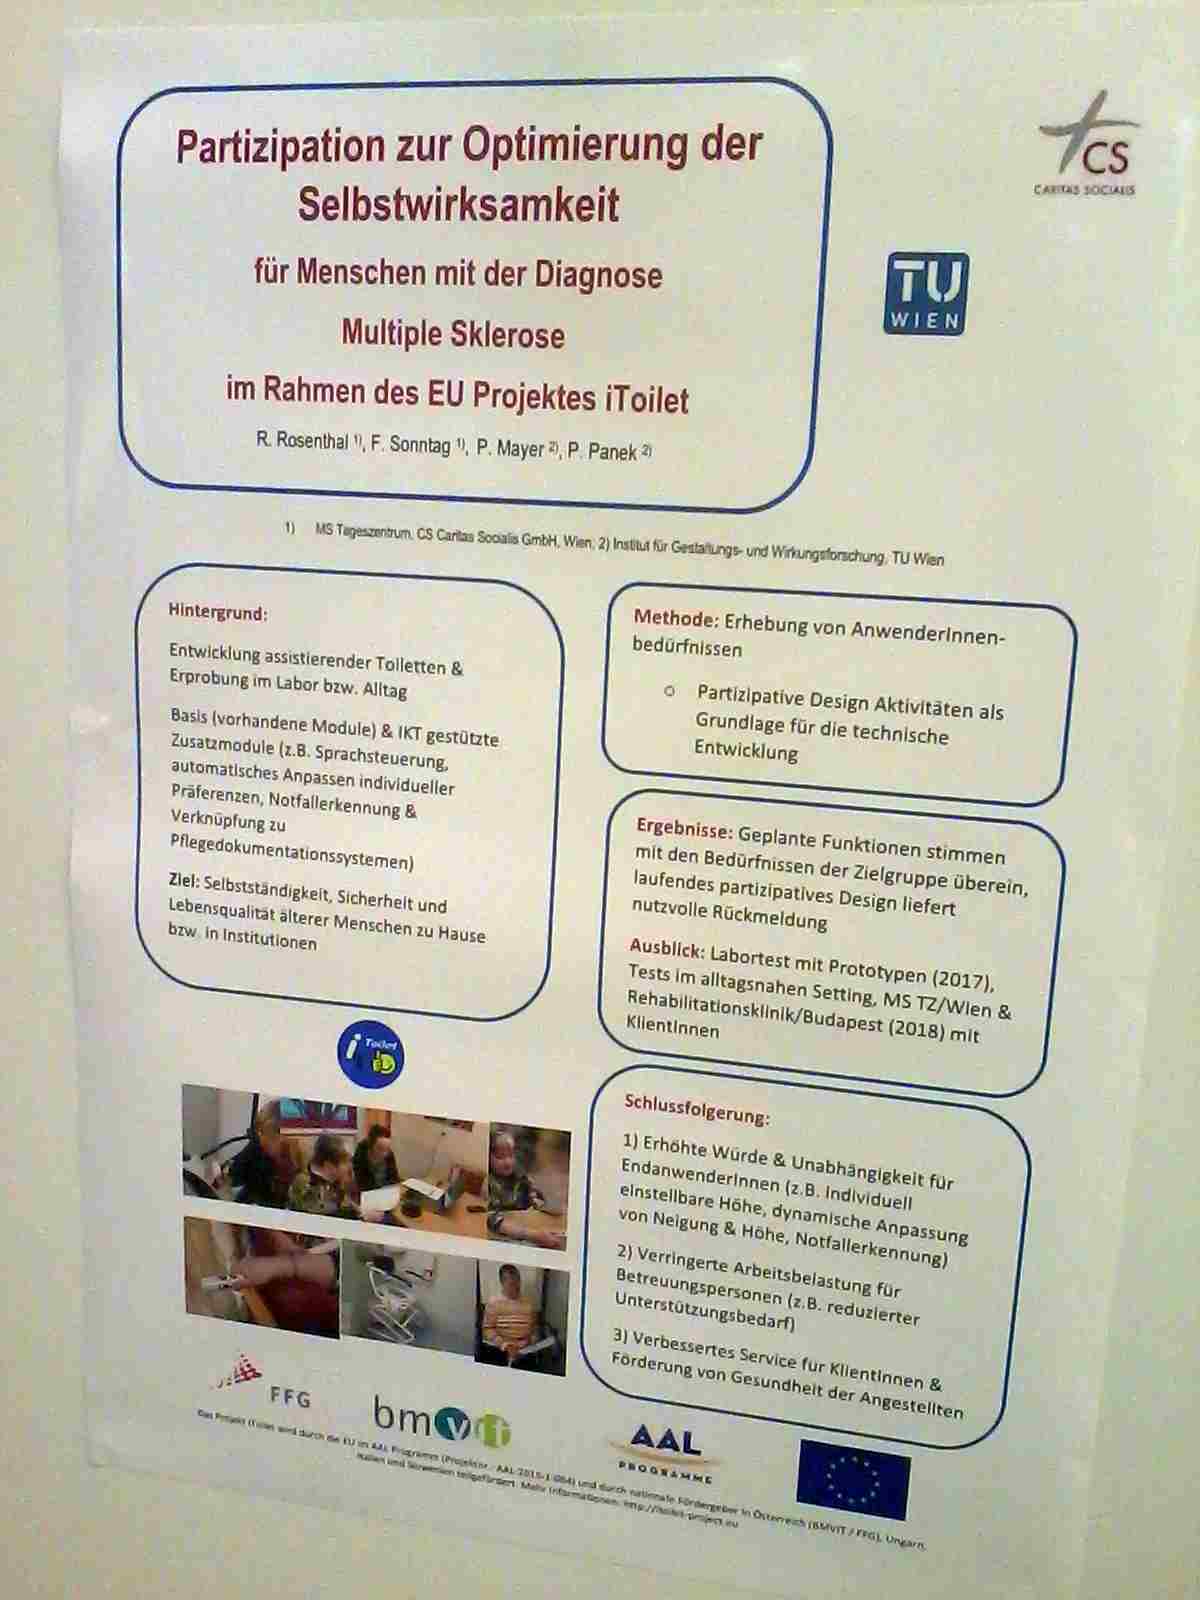 poster presentation at nursing congress Vienna